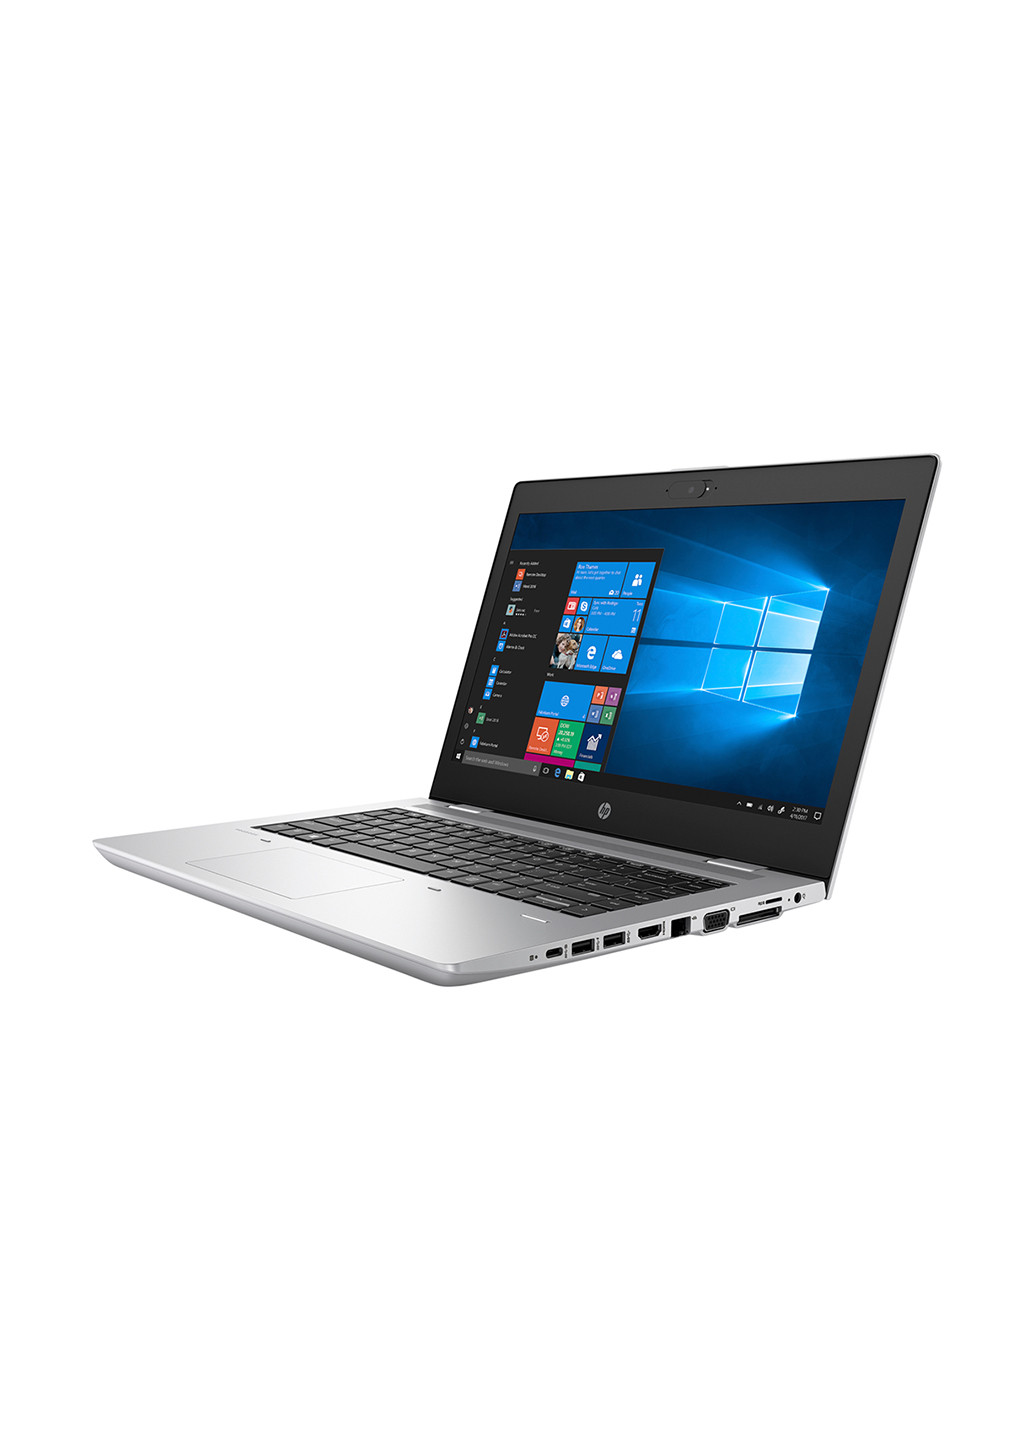 Ноутбук Silver HP probook 640 g4 (2gl98av_v9) (130617441)